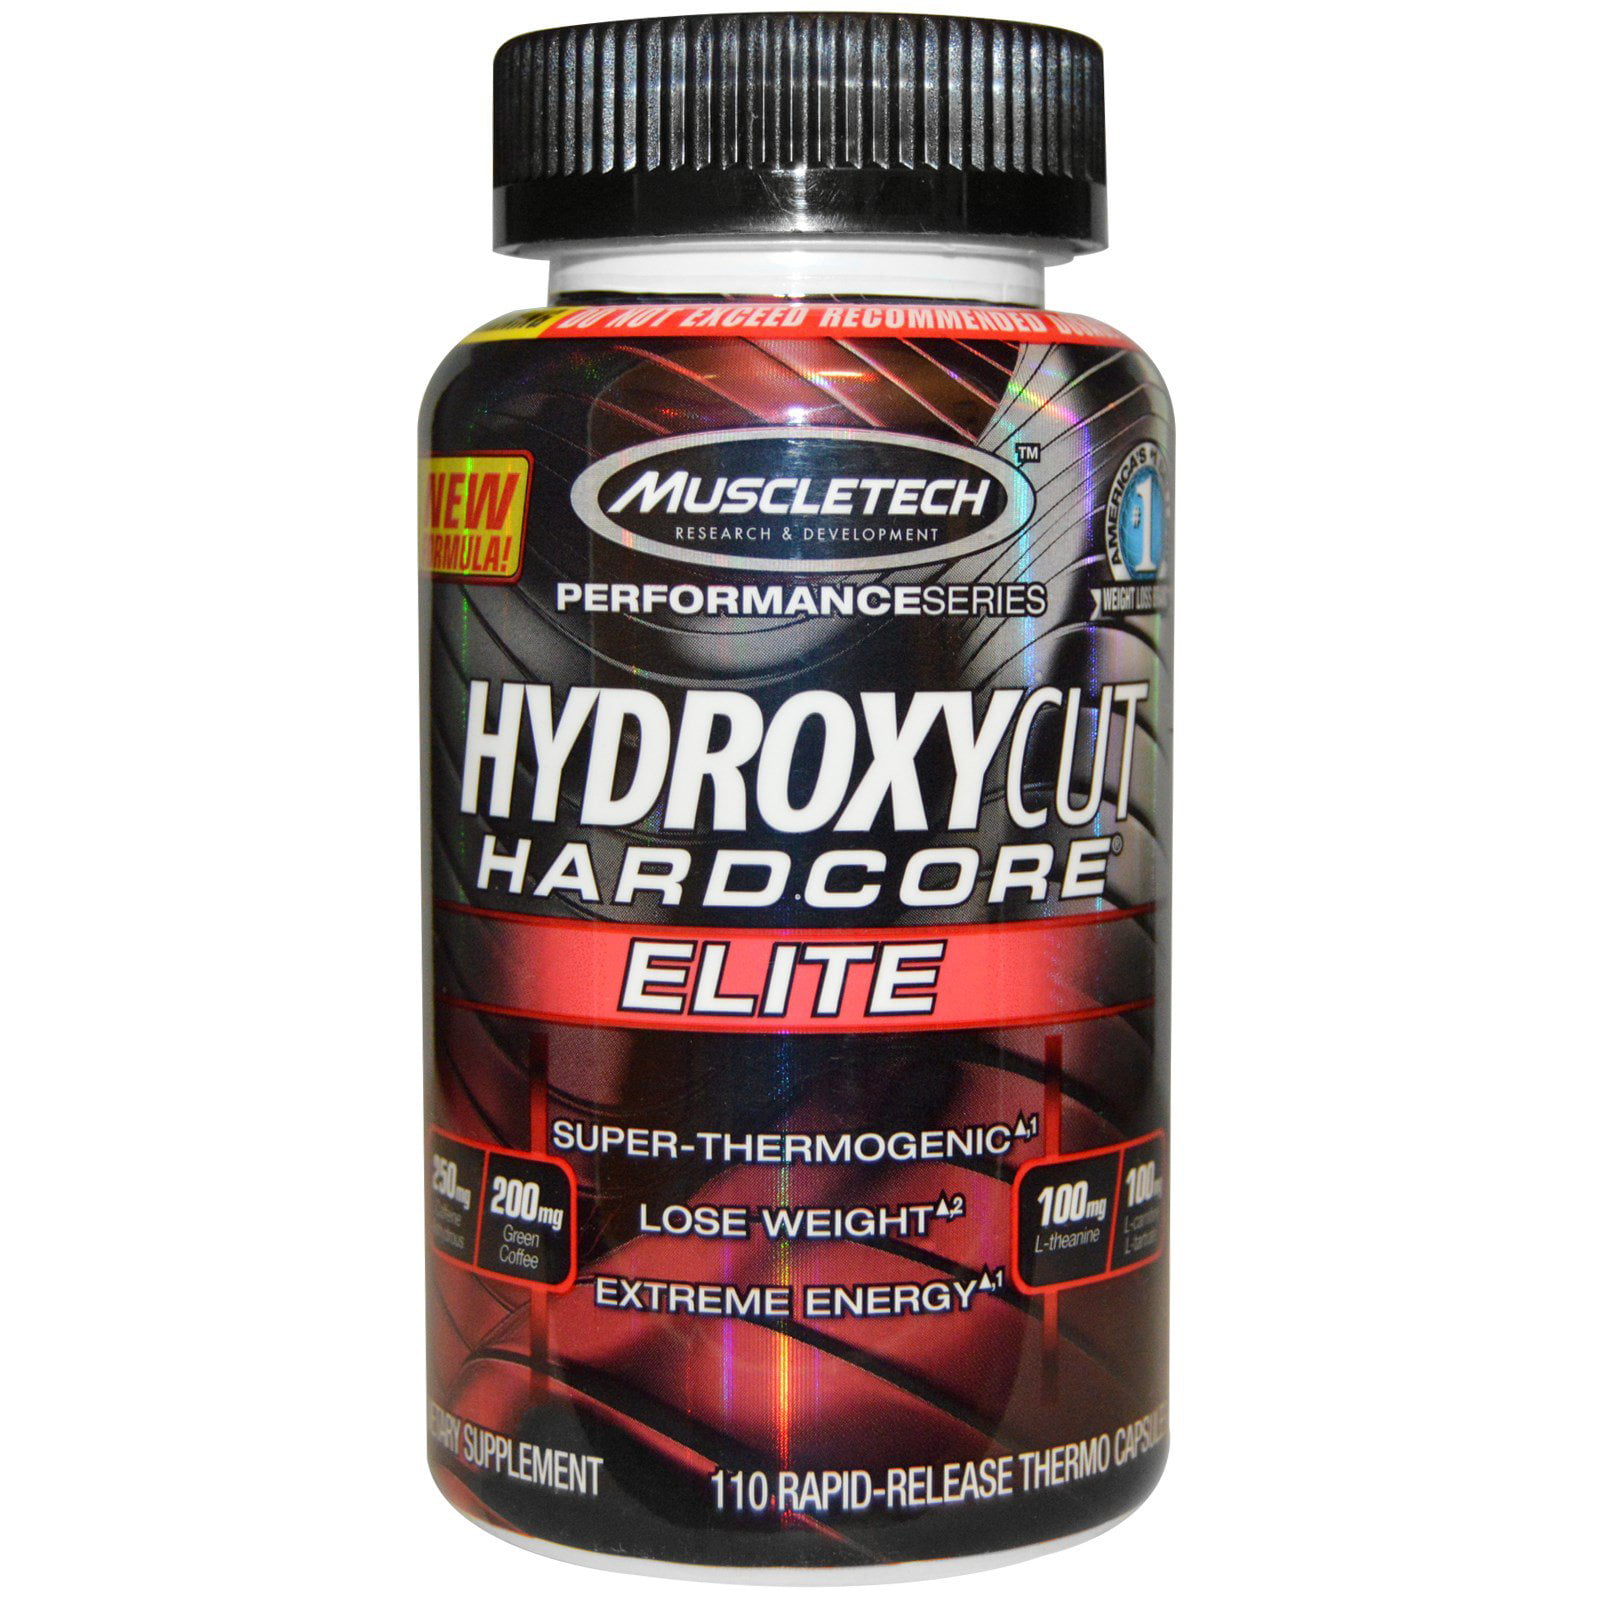 Hydroxycut Performance Series, Hardcore Elite, 110 RapidRelease Thermo